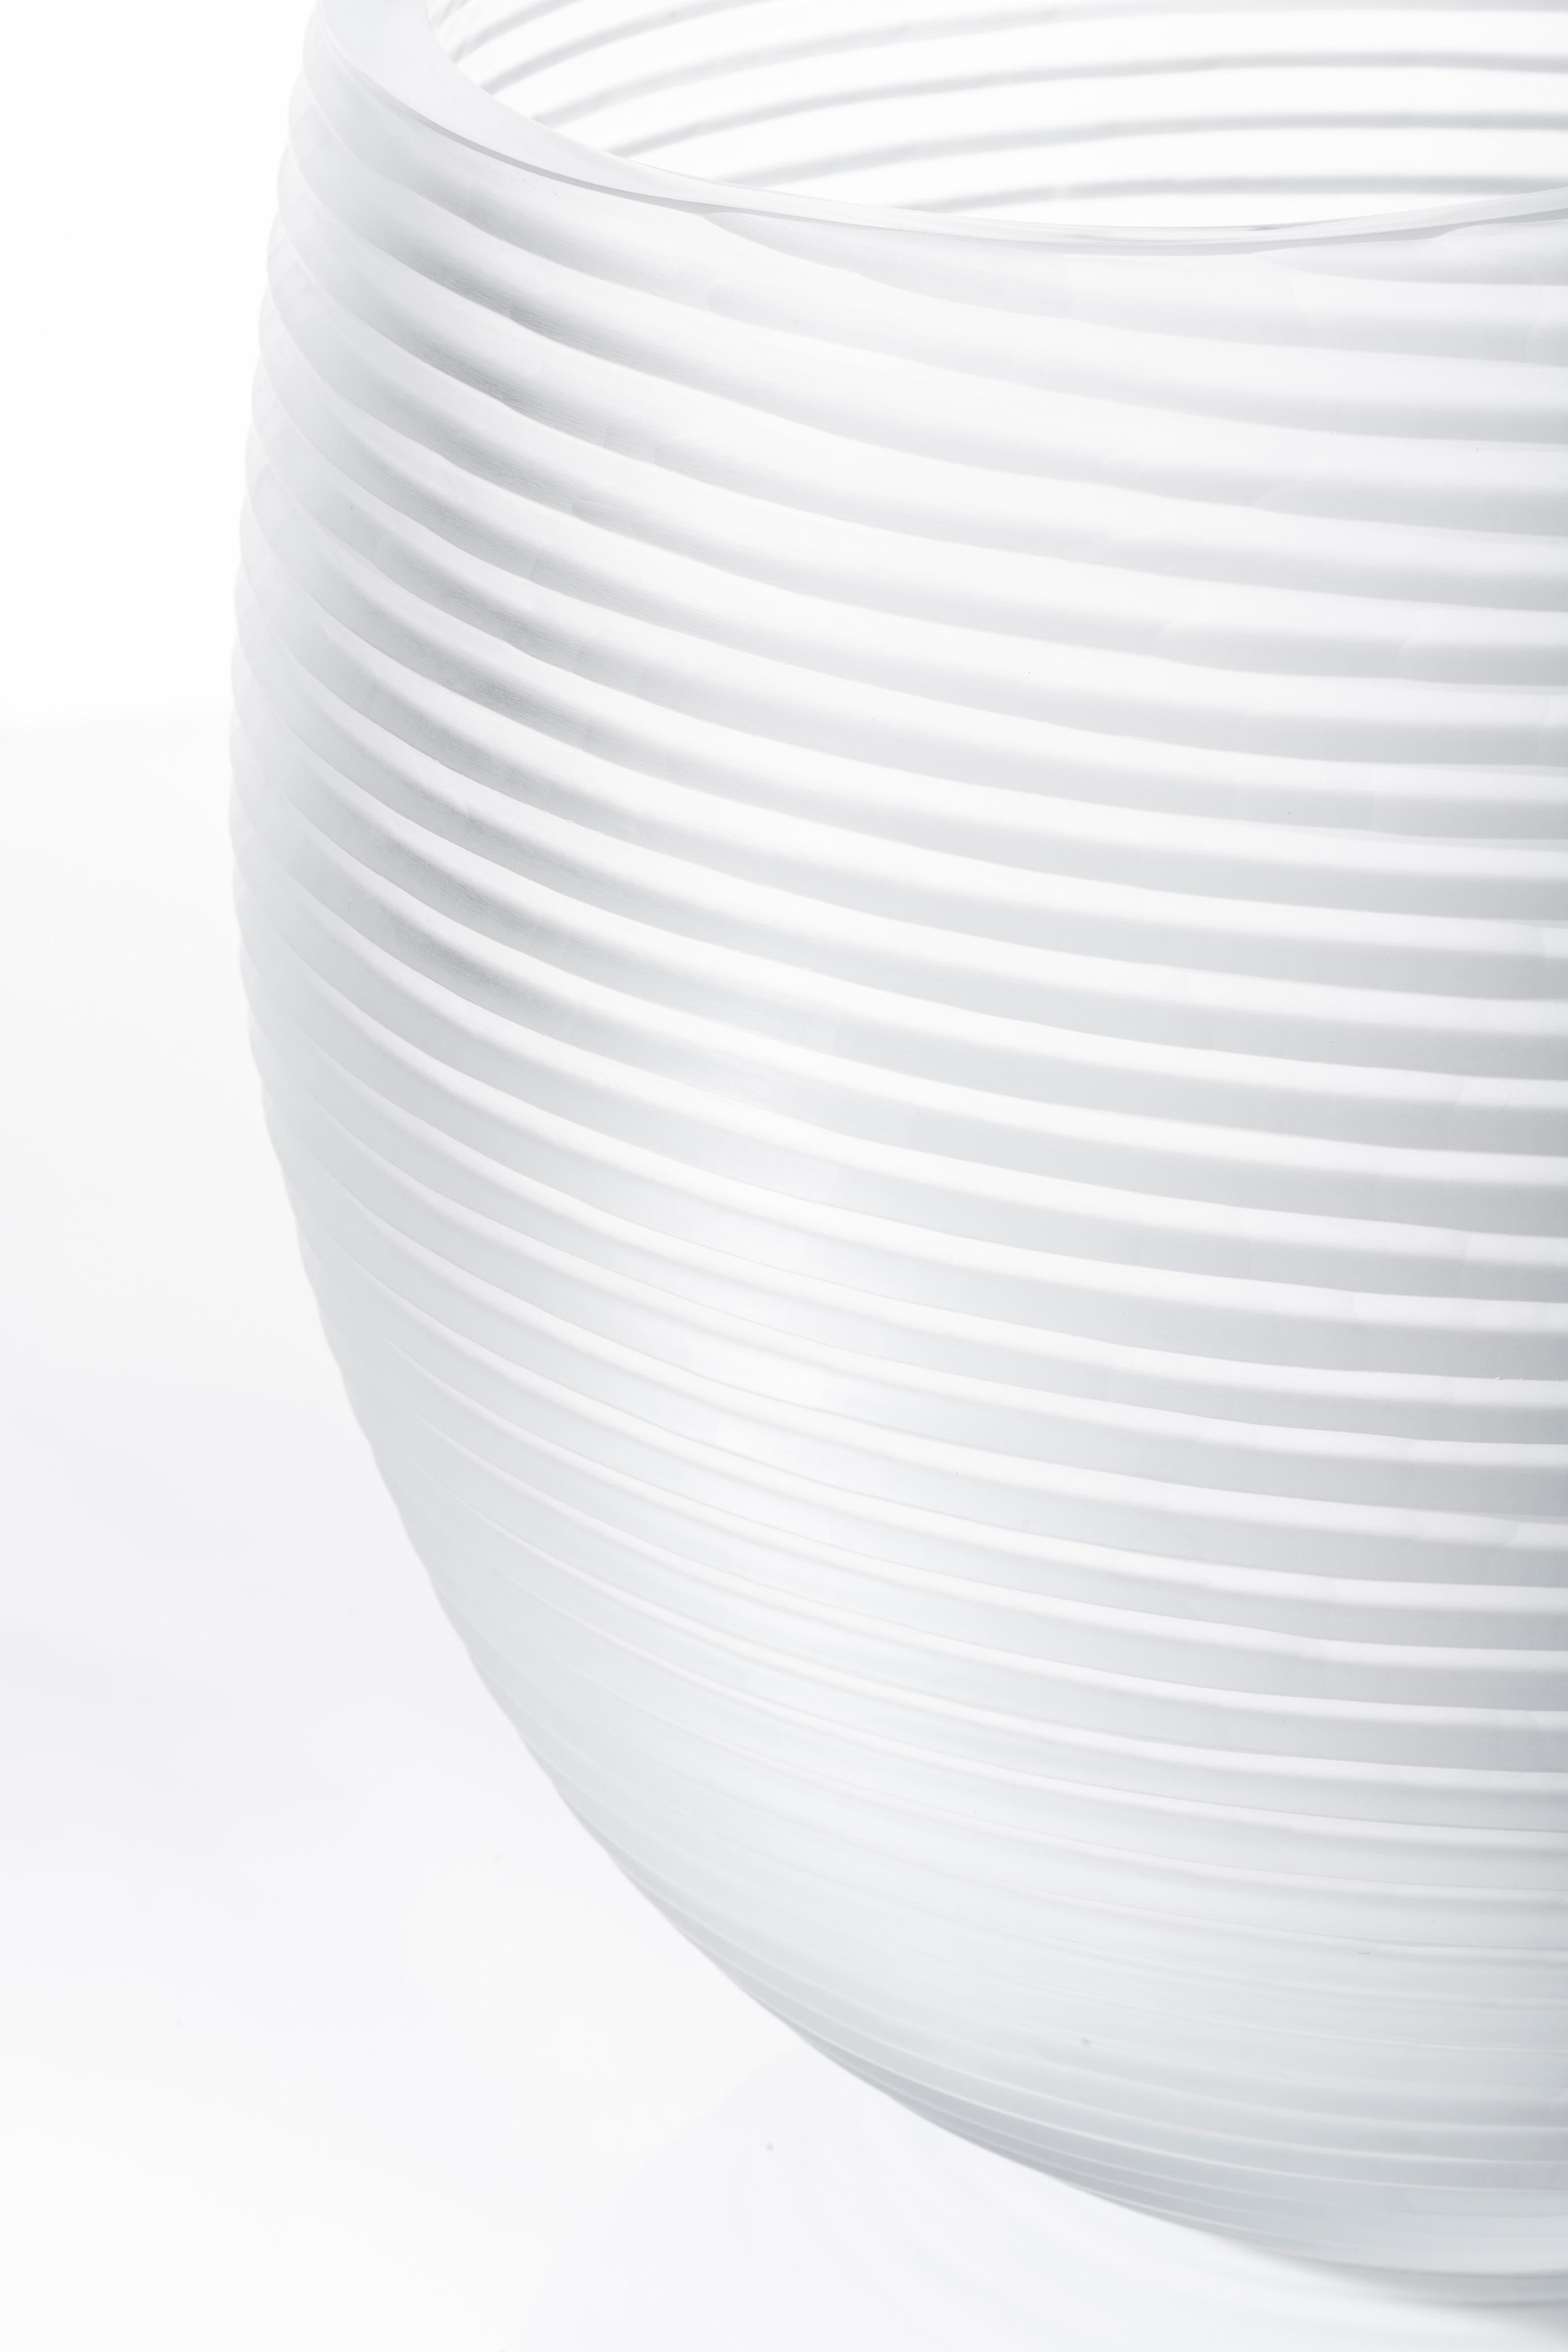 Italian 21st Century Federico Peri Linae Large Vase Murano Glass Crystal colour For Sale